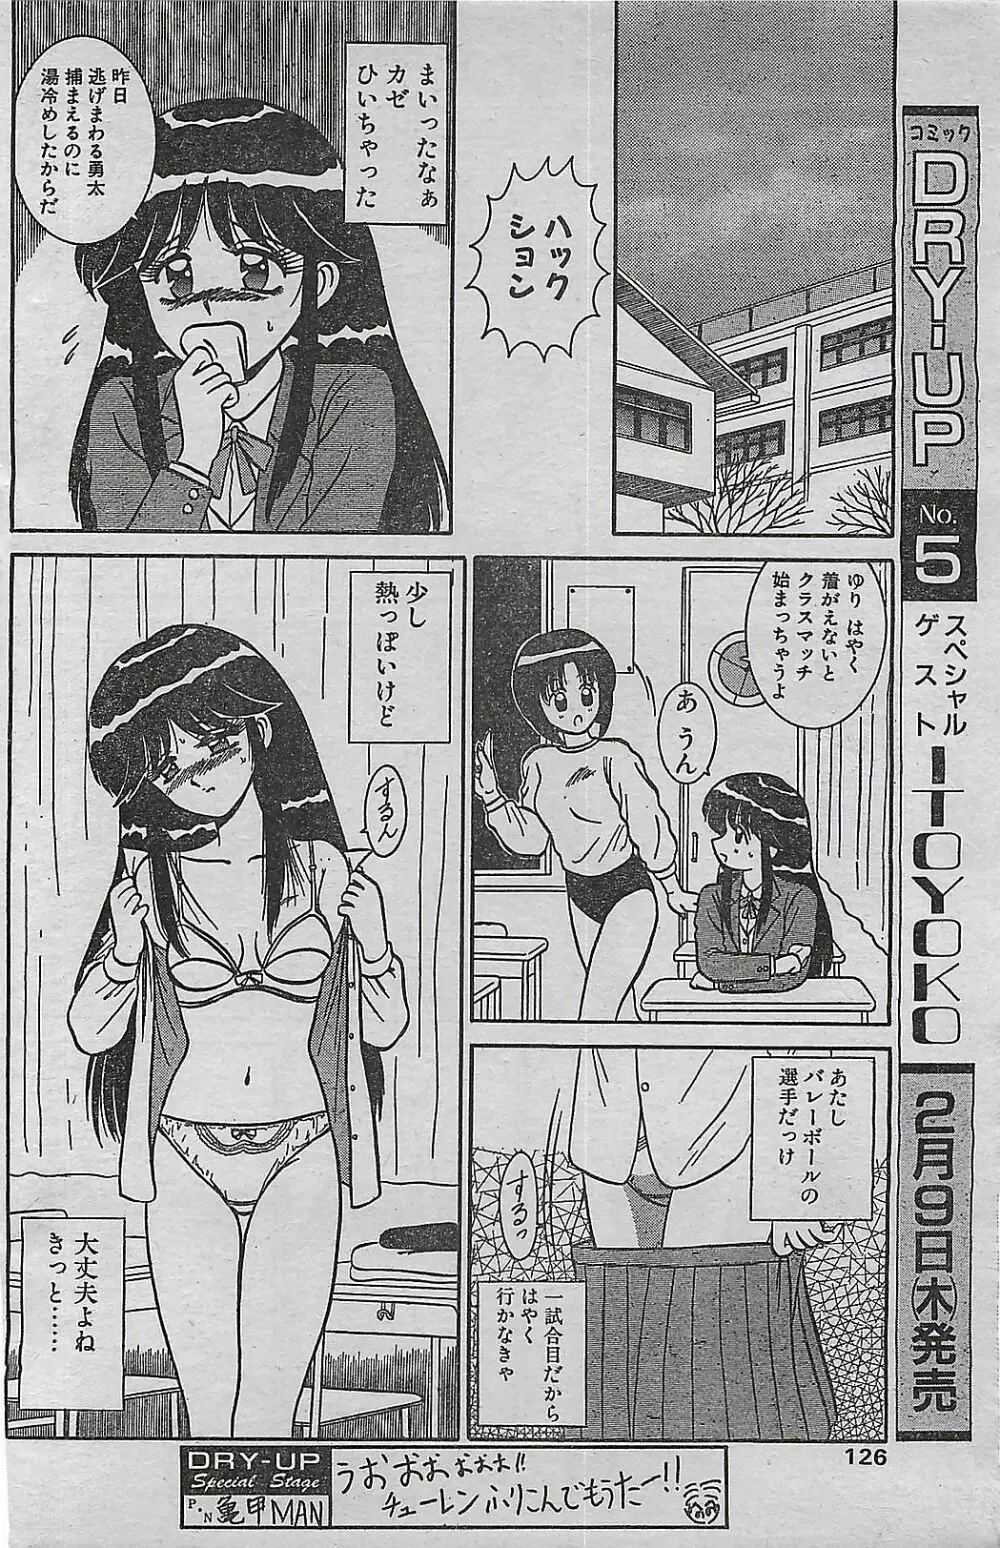 COMIC ドライ-アップ No.4 1995年02月号 126ページ